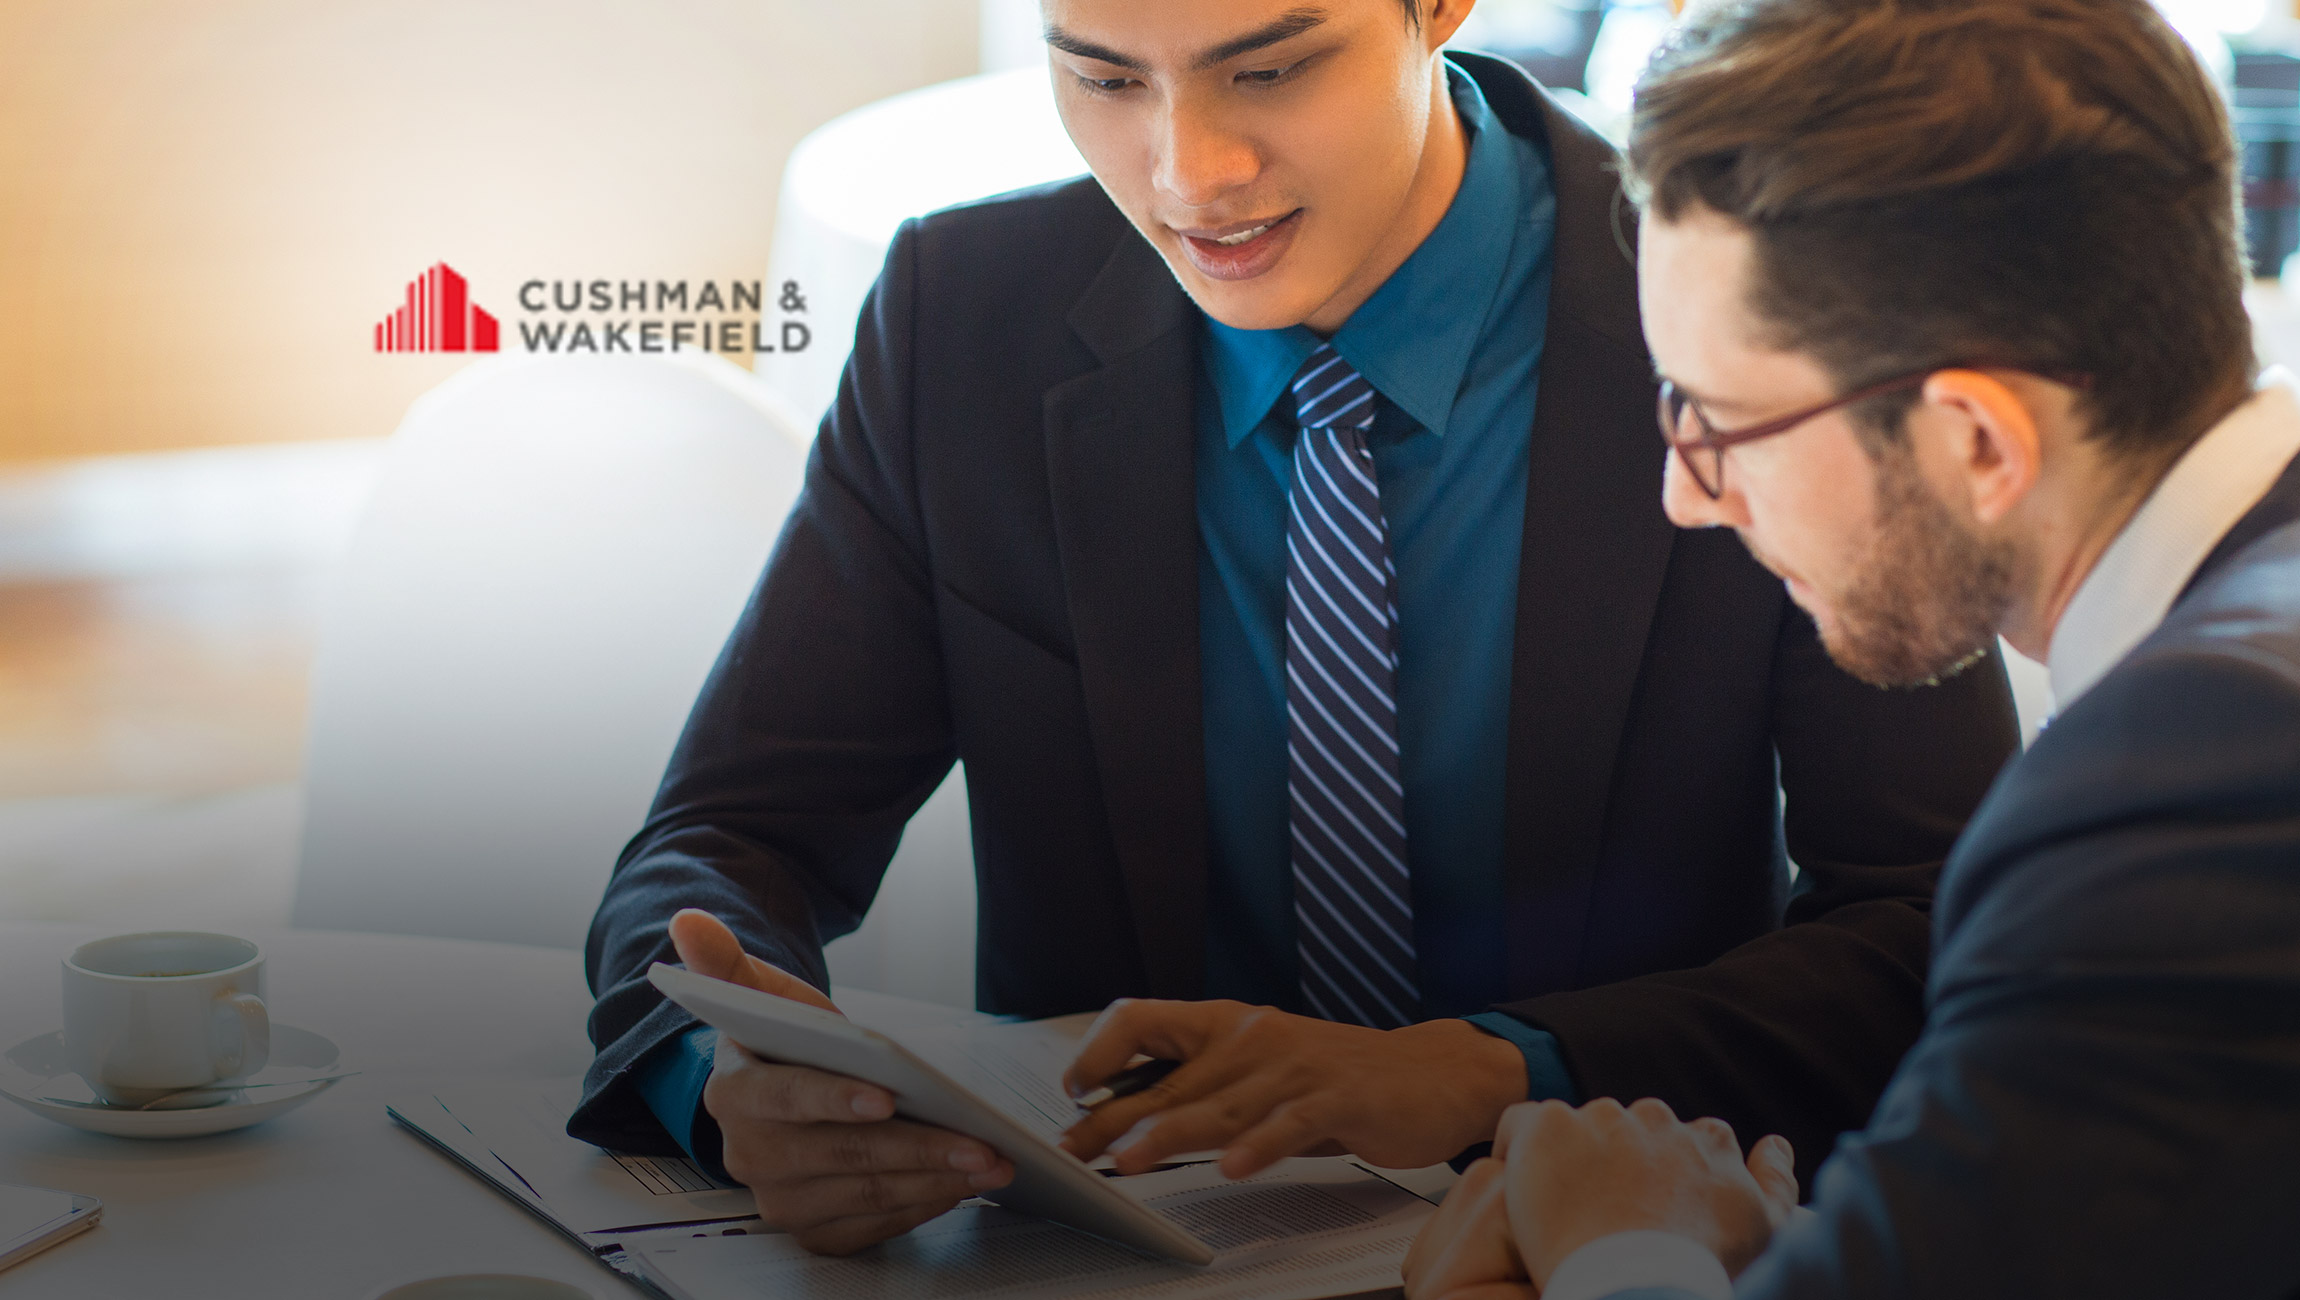 Cushman & Wakefield Releases 2019 Corporate Social Responsibility Report